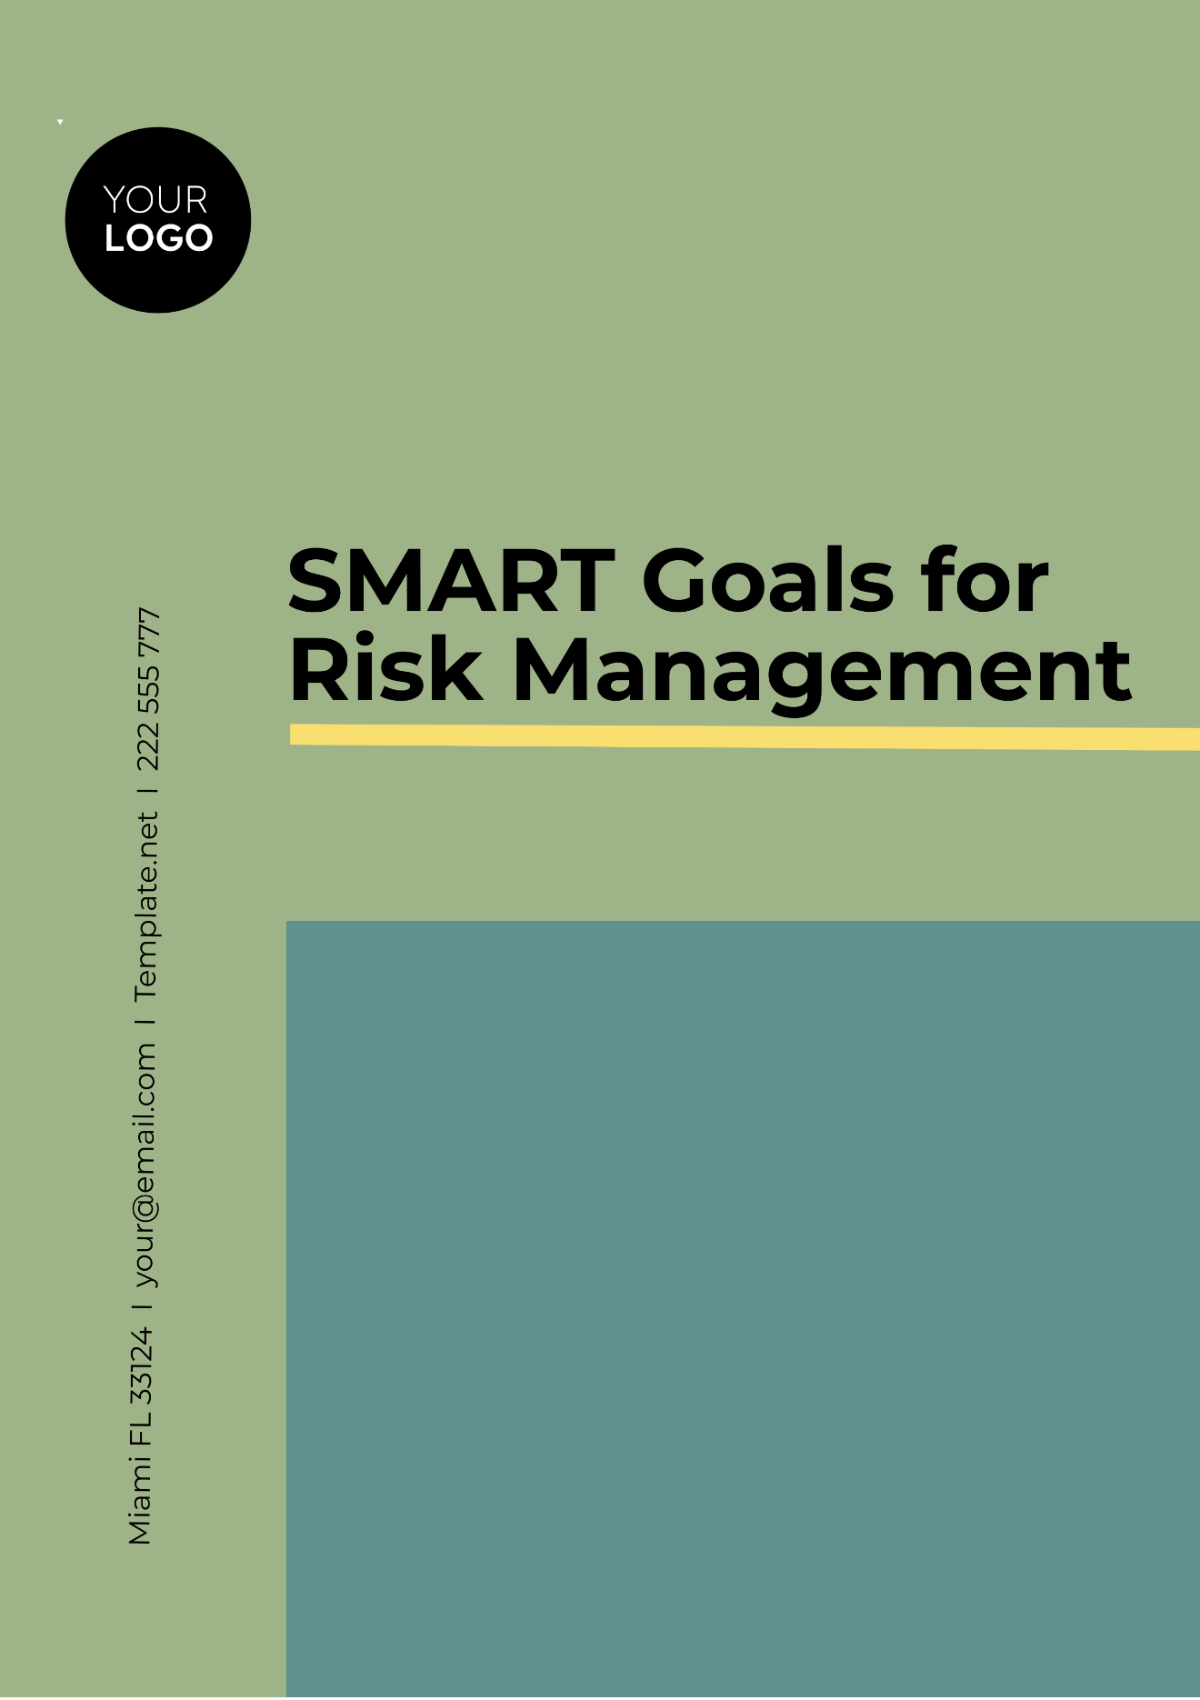 SMART Goals Template for Risk Management